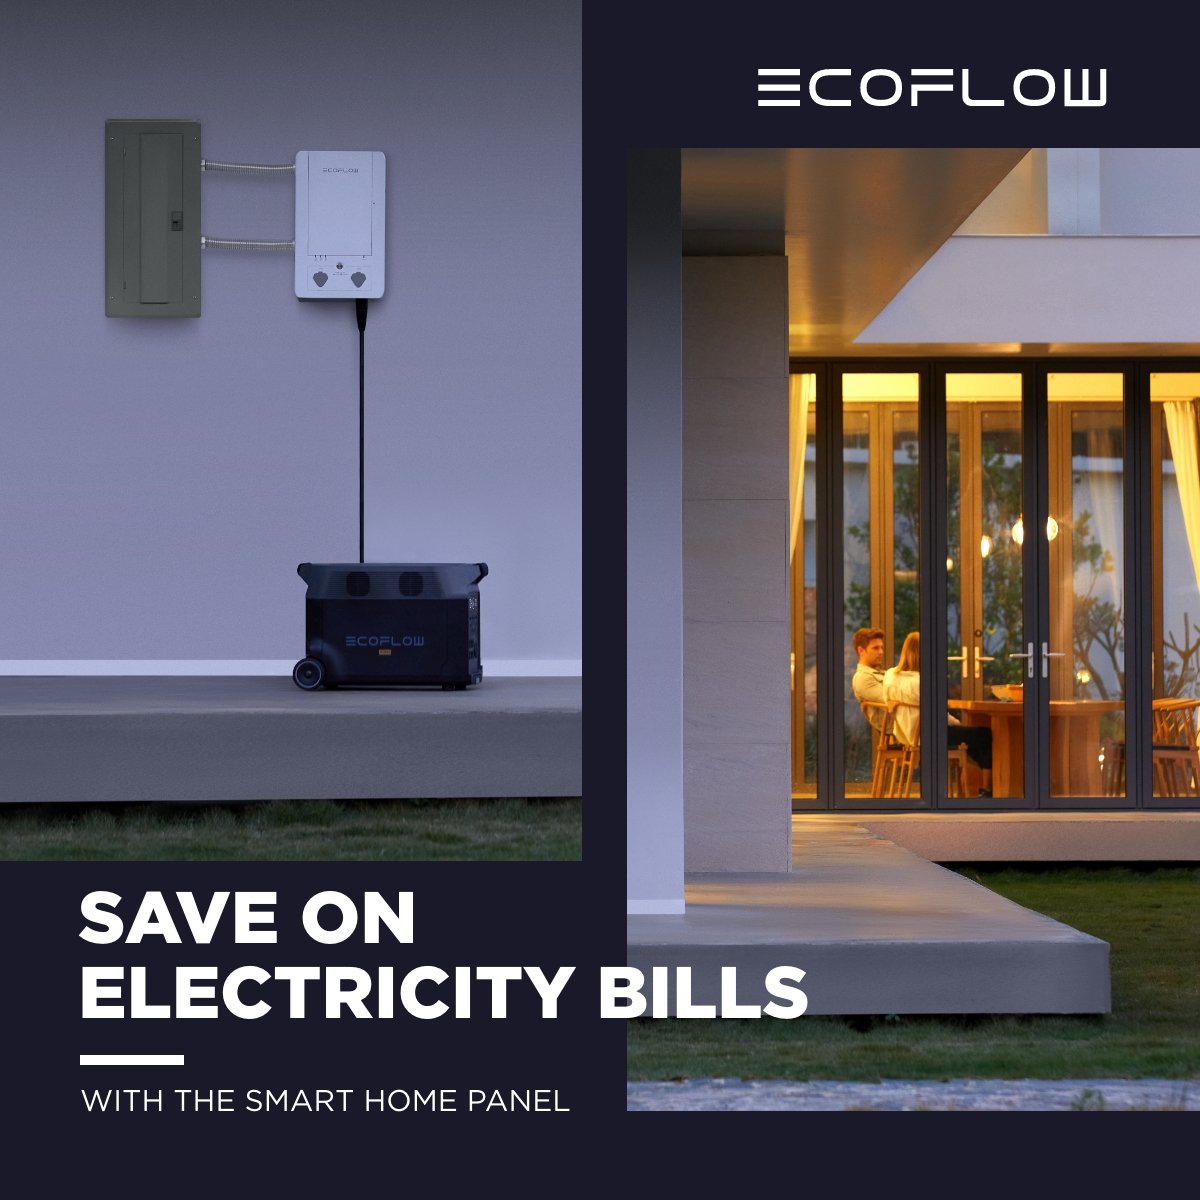 EcoFlow Delta Pro Power Station + Smart Home Panel Installed in Garage